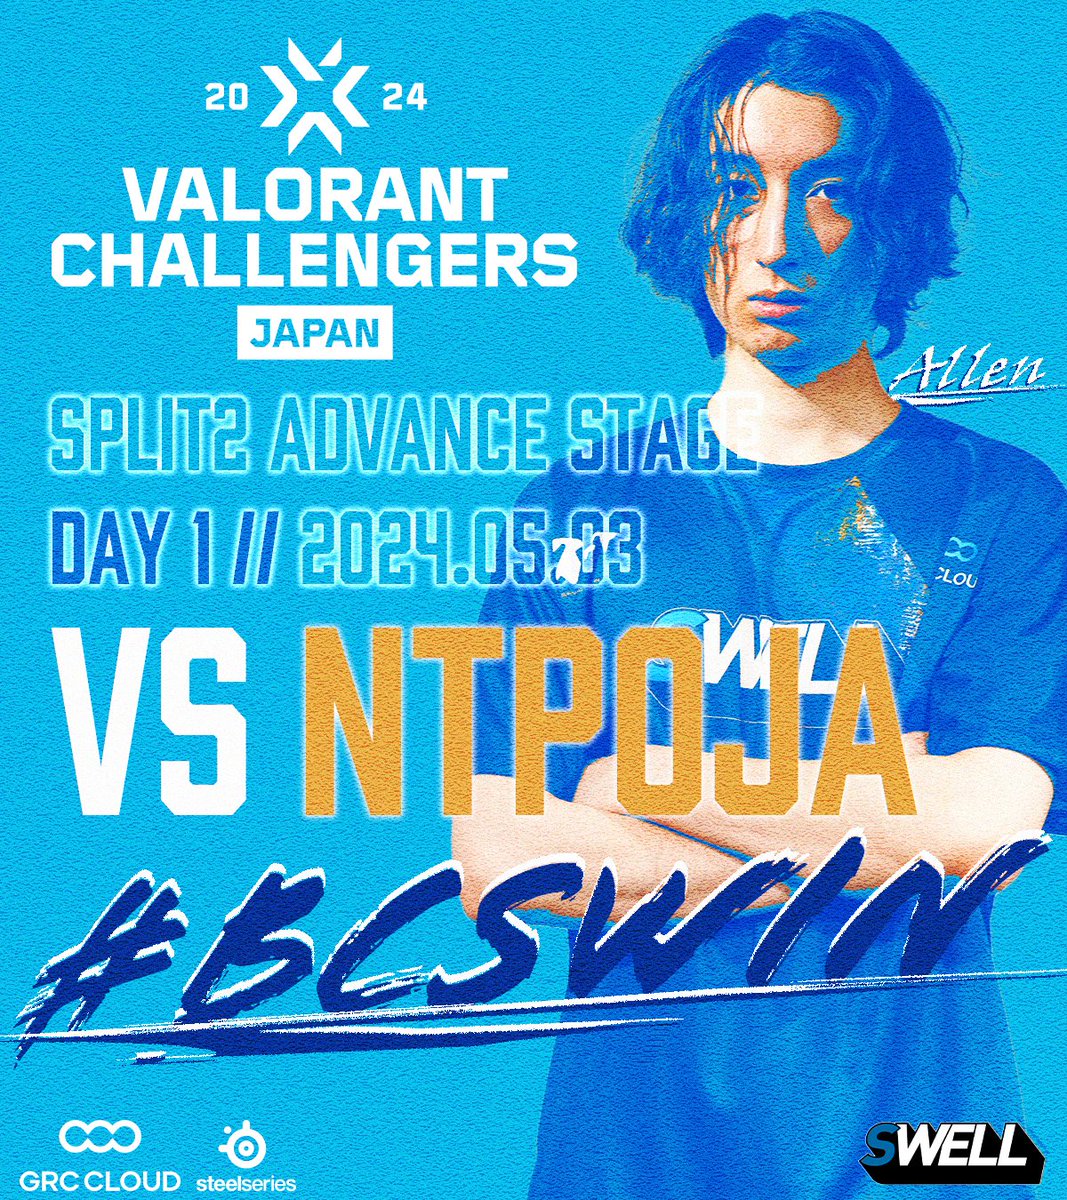 ▍#VALORANT Challengers Japan Split 2
Advance Stage

みんな、オラたちにちょっとずつだけ 元気ｨ分けてくれ...🙌
いくぞMainStage‼️

@Allen_vlr
@Ask1185_
@sakura_vlt
@Jansan9_
@Yowamuvlrt
@Rem_valo
@CullanSmith
@arthRoSZN

#BCSWIN
#ChallengersJP